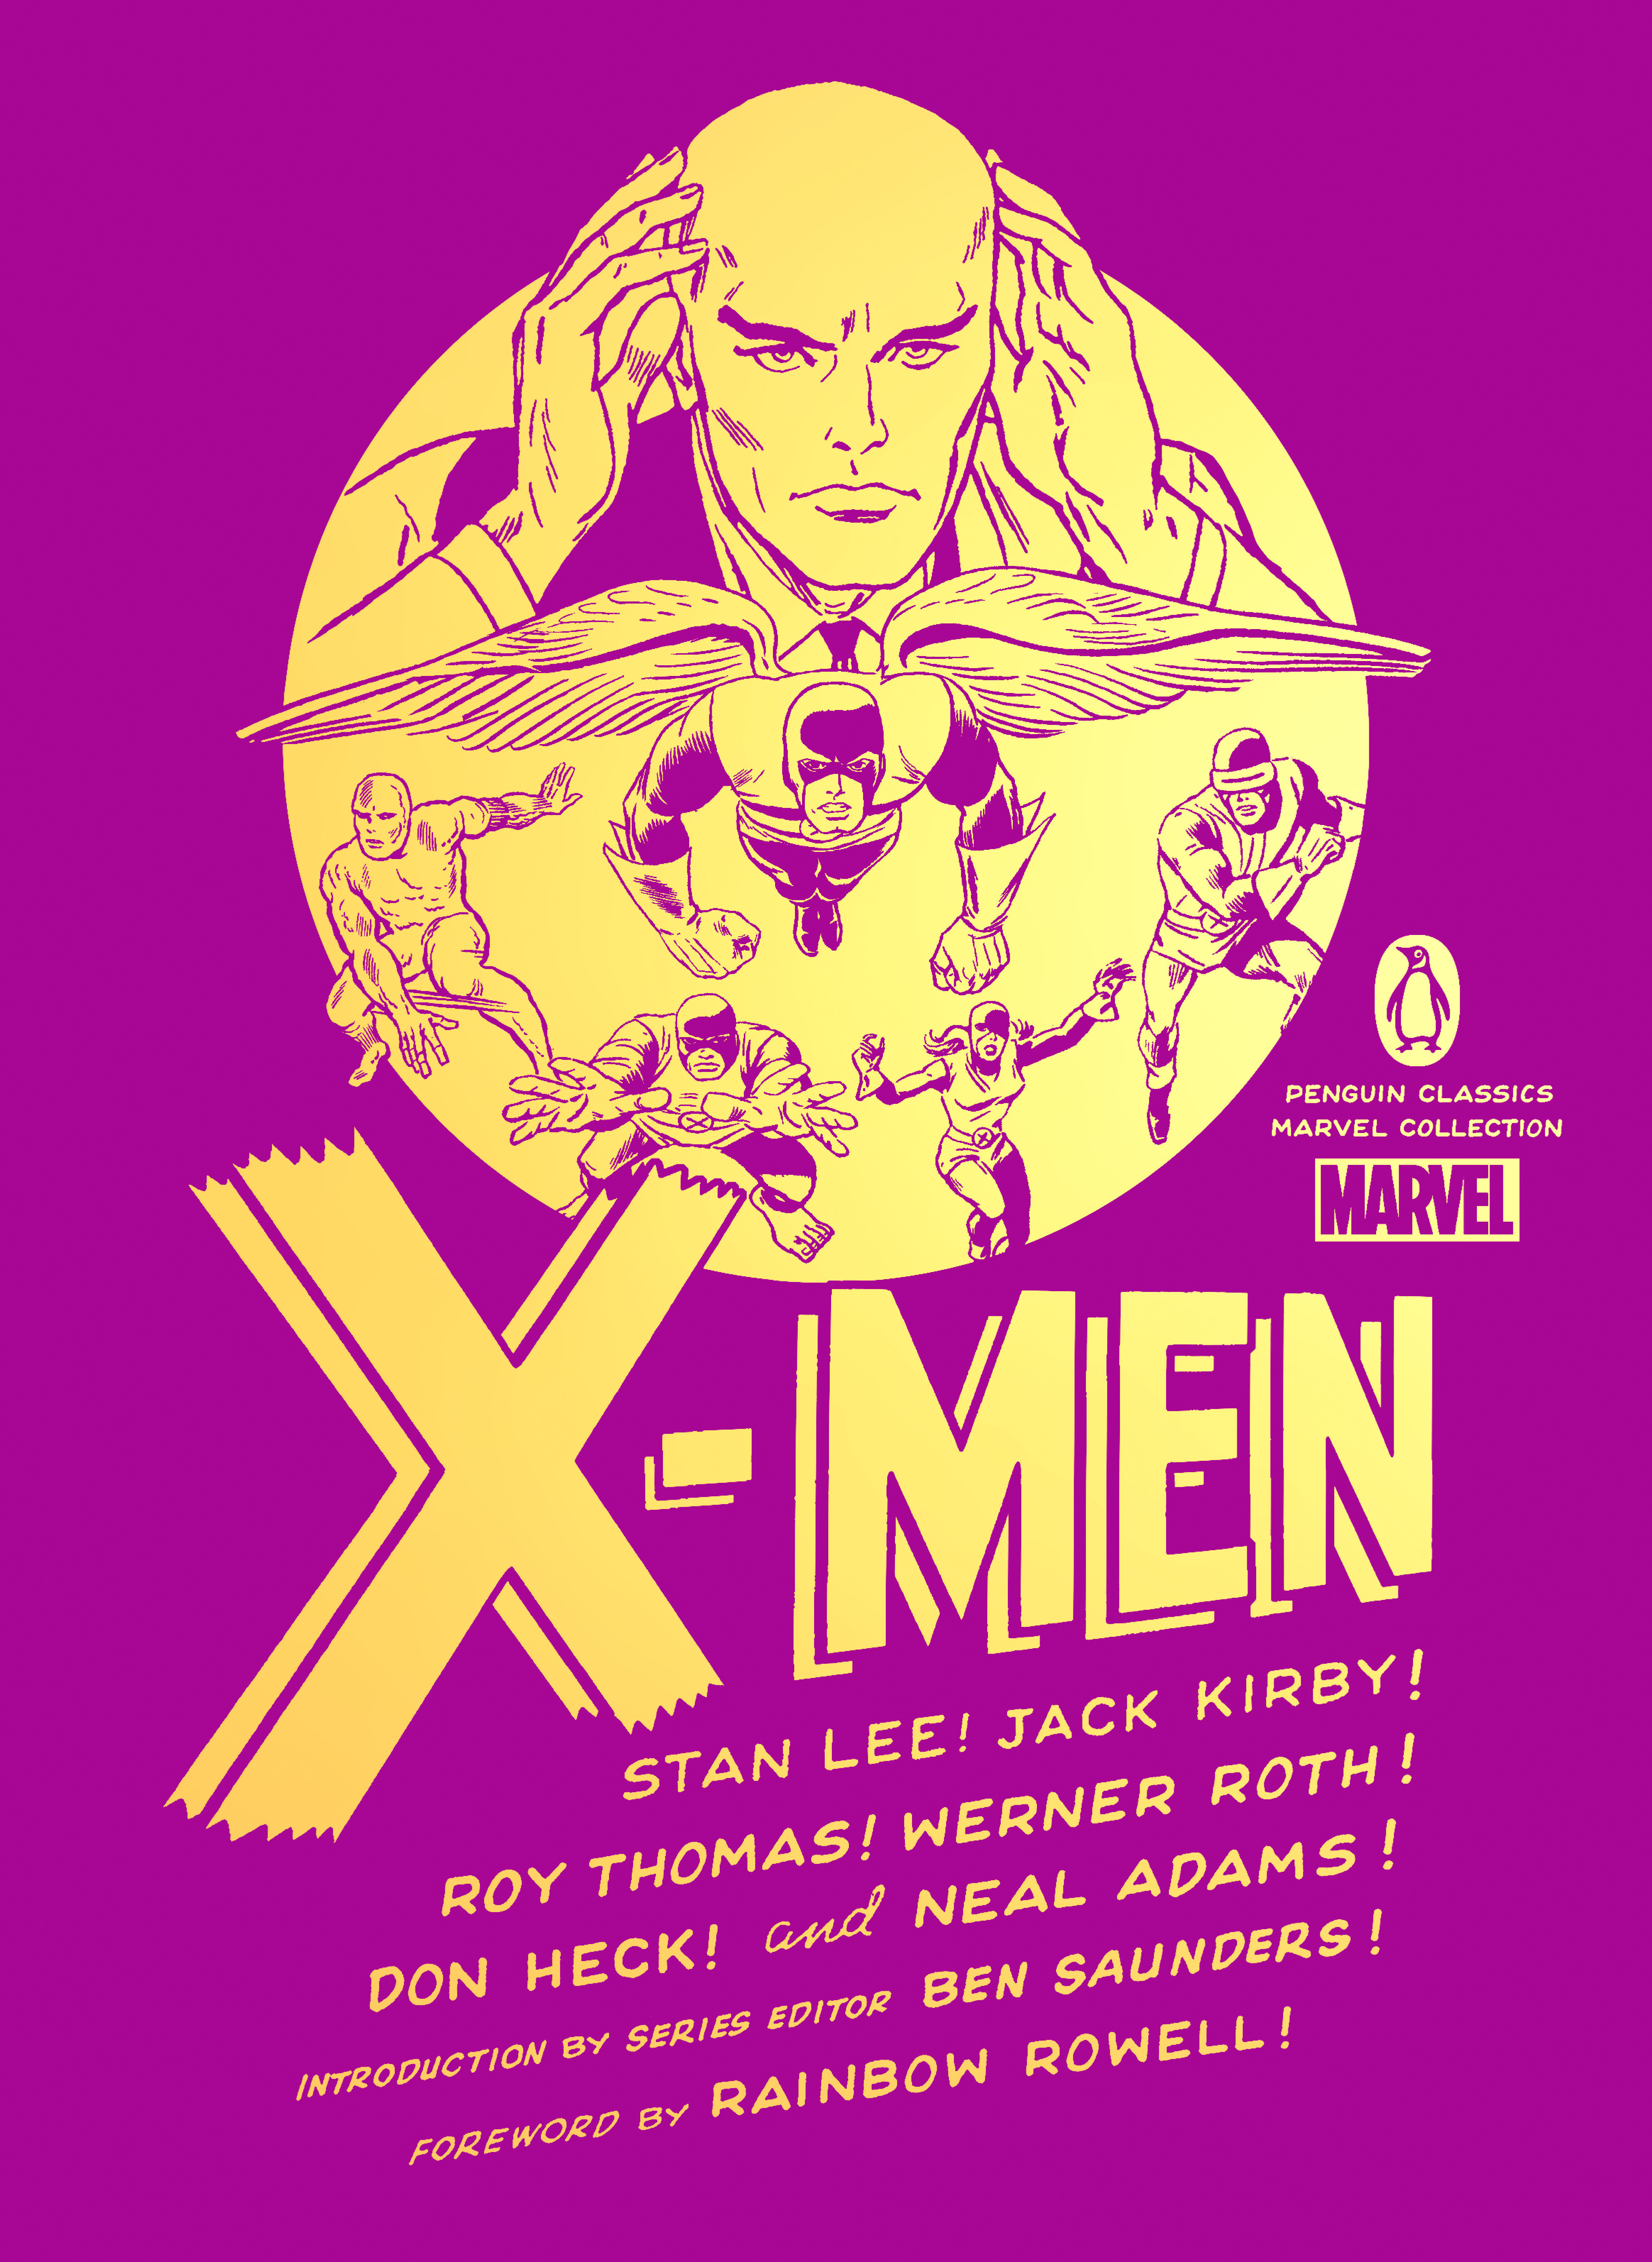 Penguin Classics Marvel Collection Hardcover Volume 4 X-Men